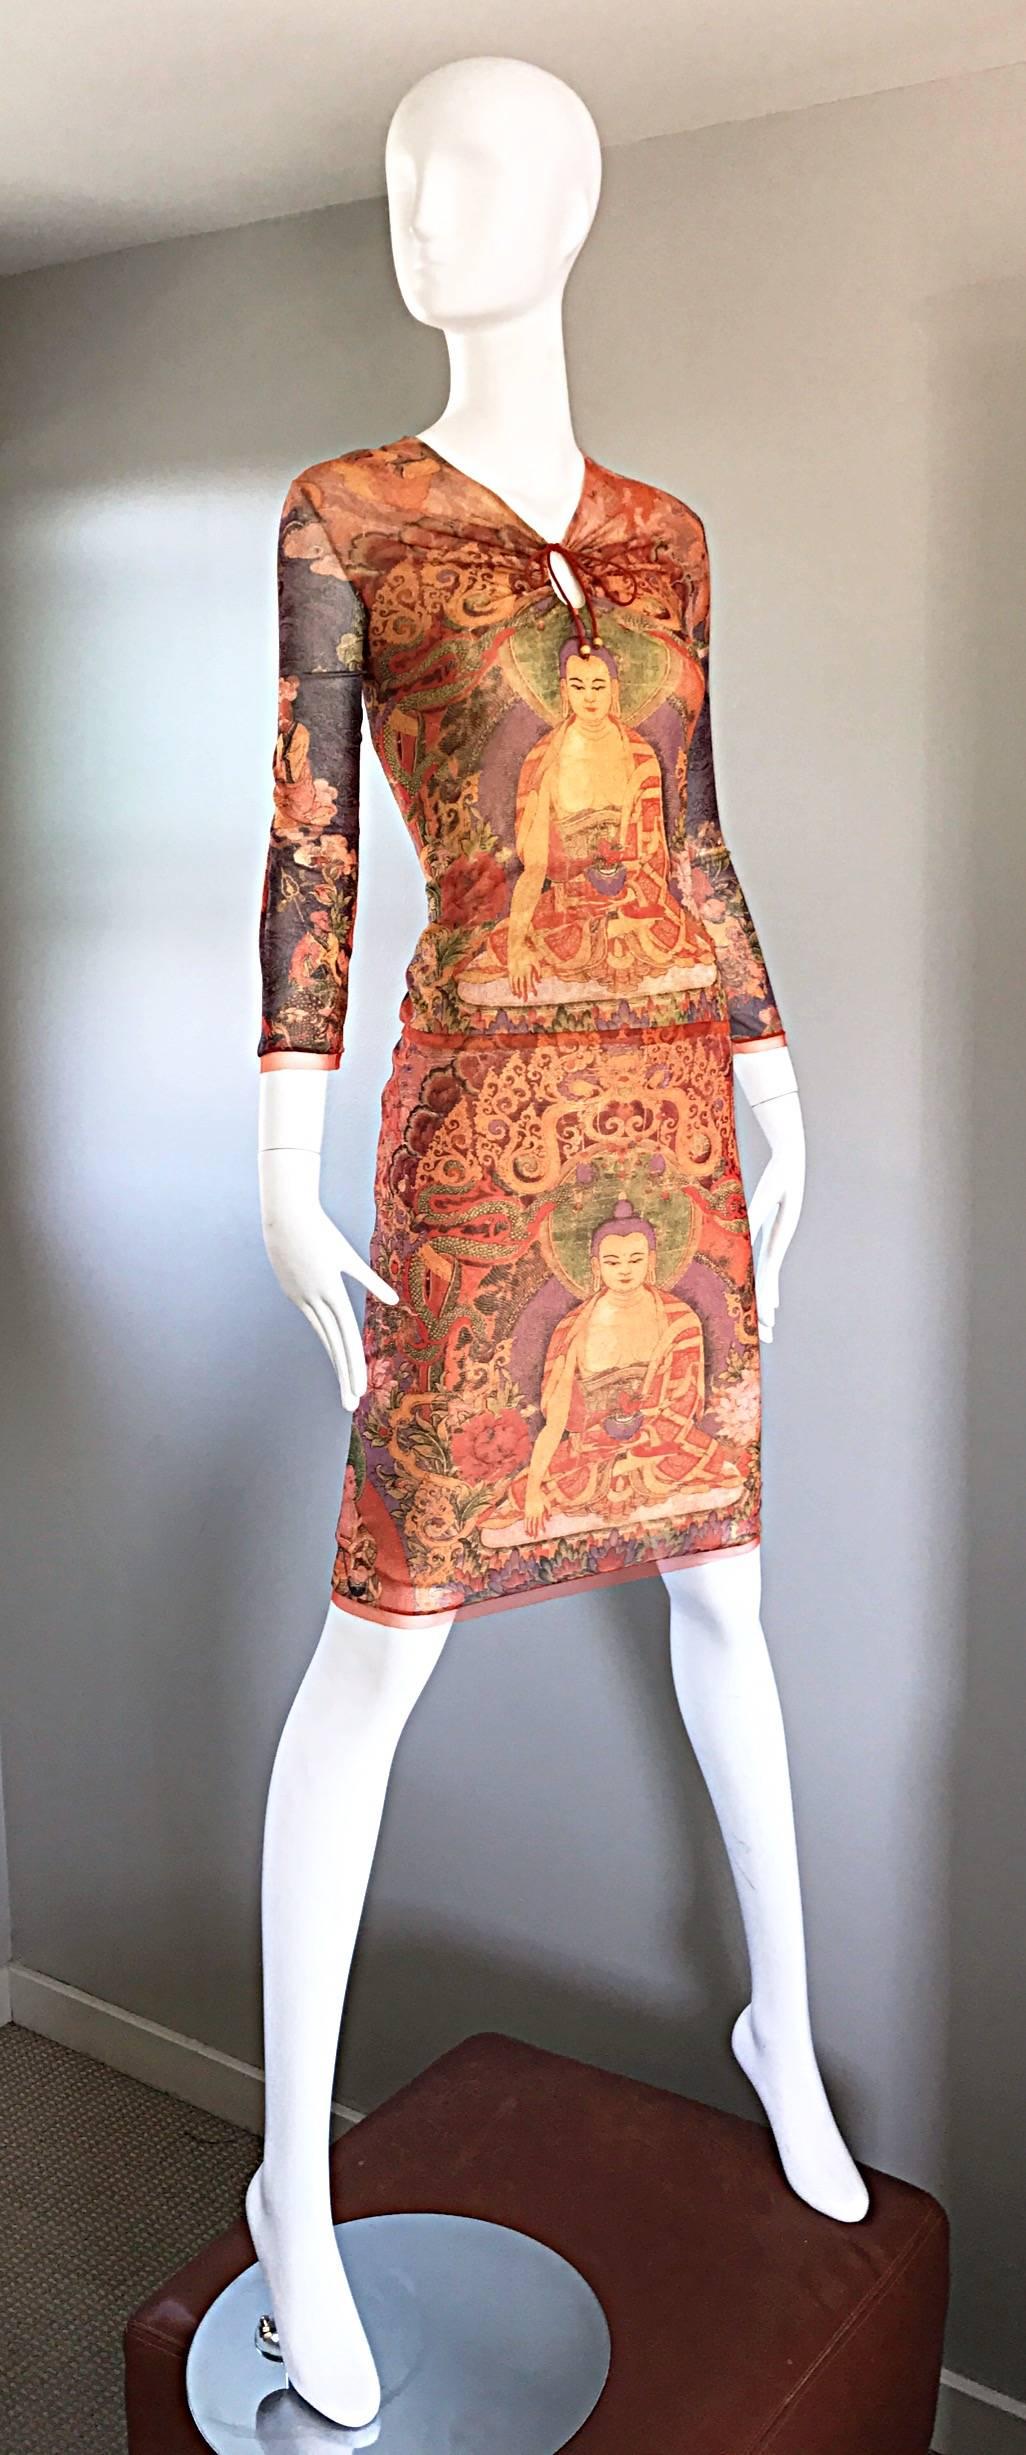 Brown Iconic Vivienne Tam Vintage 1990s ' Buddah Collection ' 90s Rare Dress Ensemble 